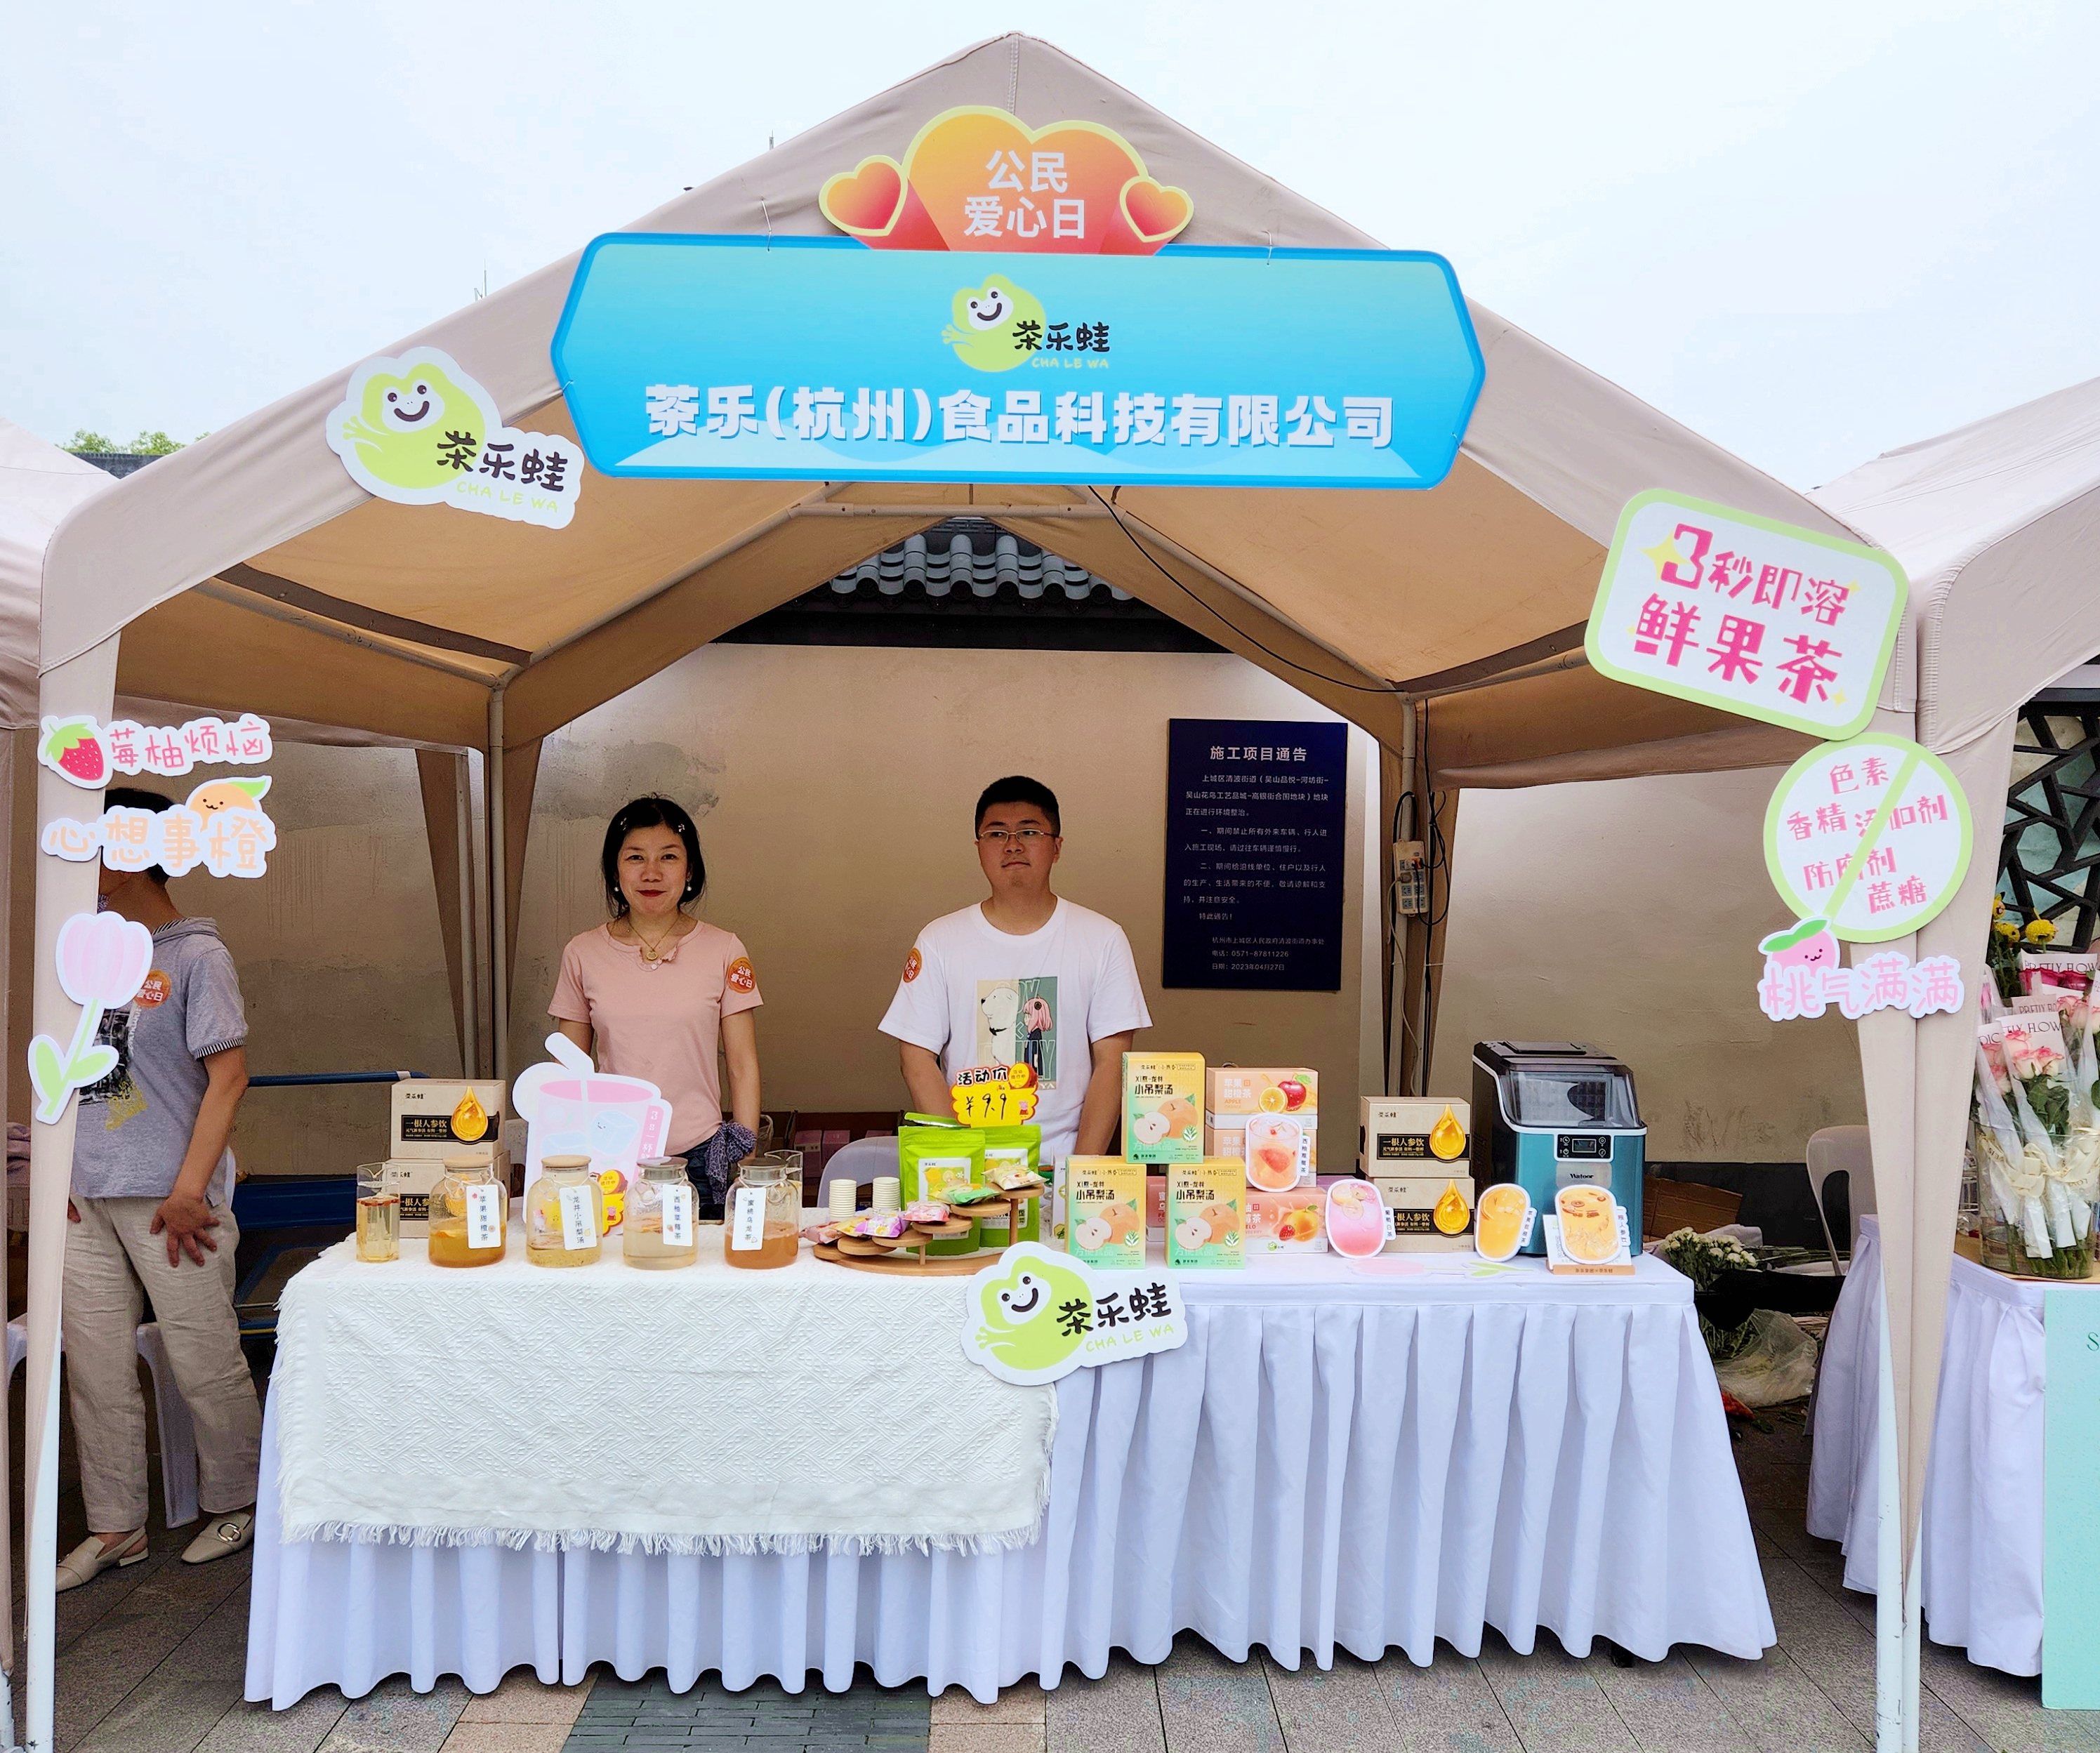 leyu体育平台（中国）股份有限公司茶乐公司参与市“公民爱心日”，“益”起传递向善力量